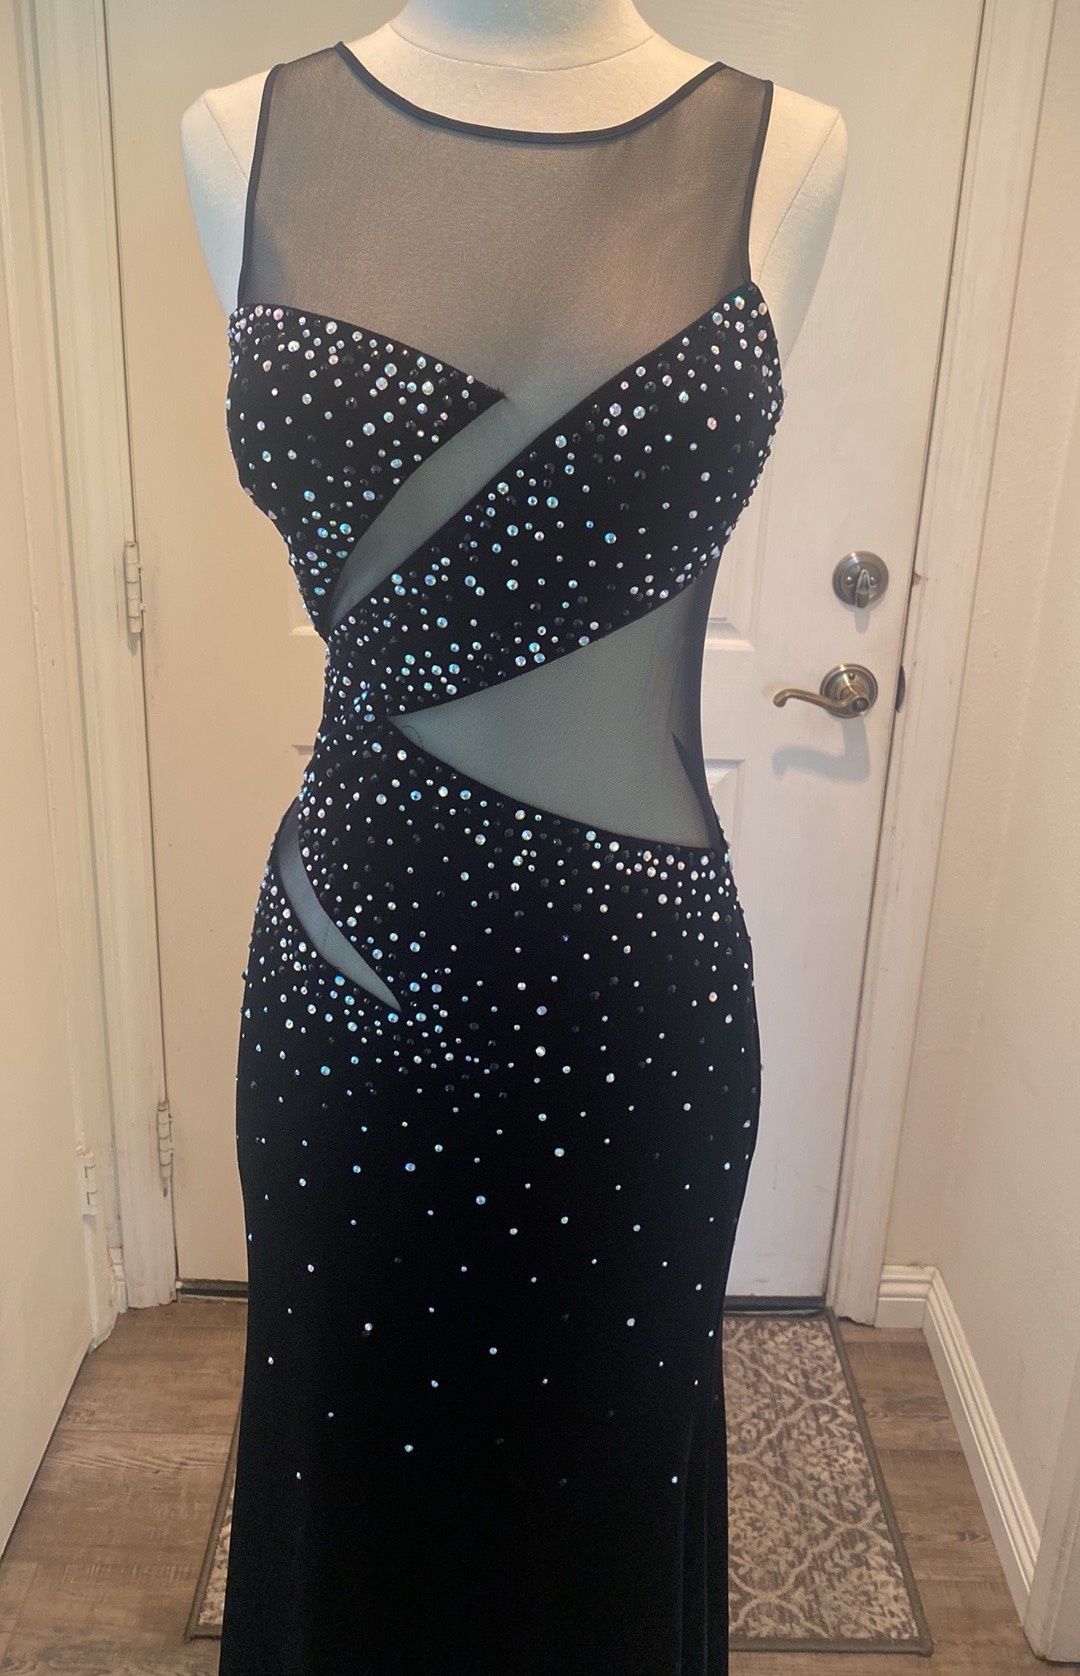 Madison James Size 2 Velvet Black Cocktail Dress on Queenly